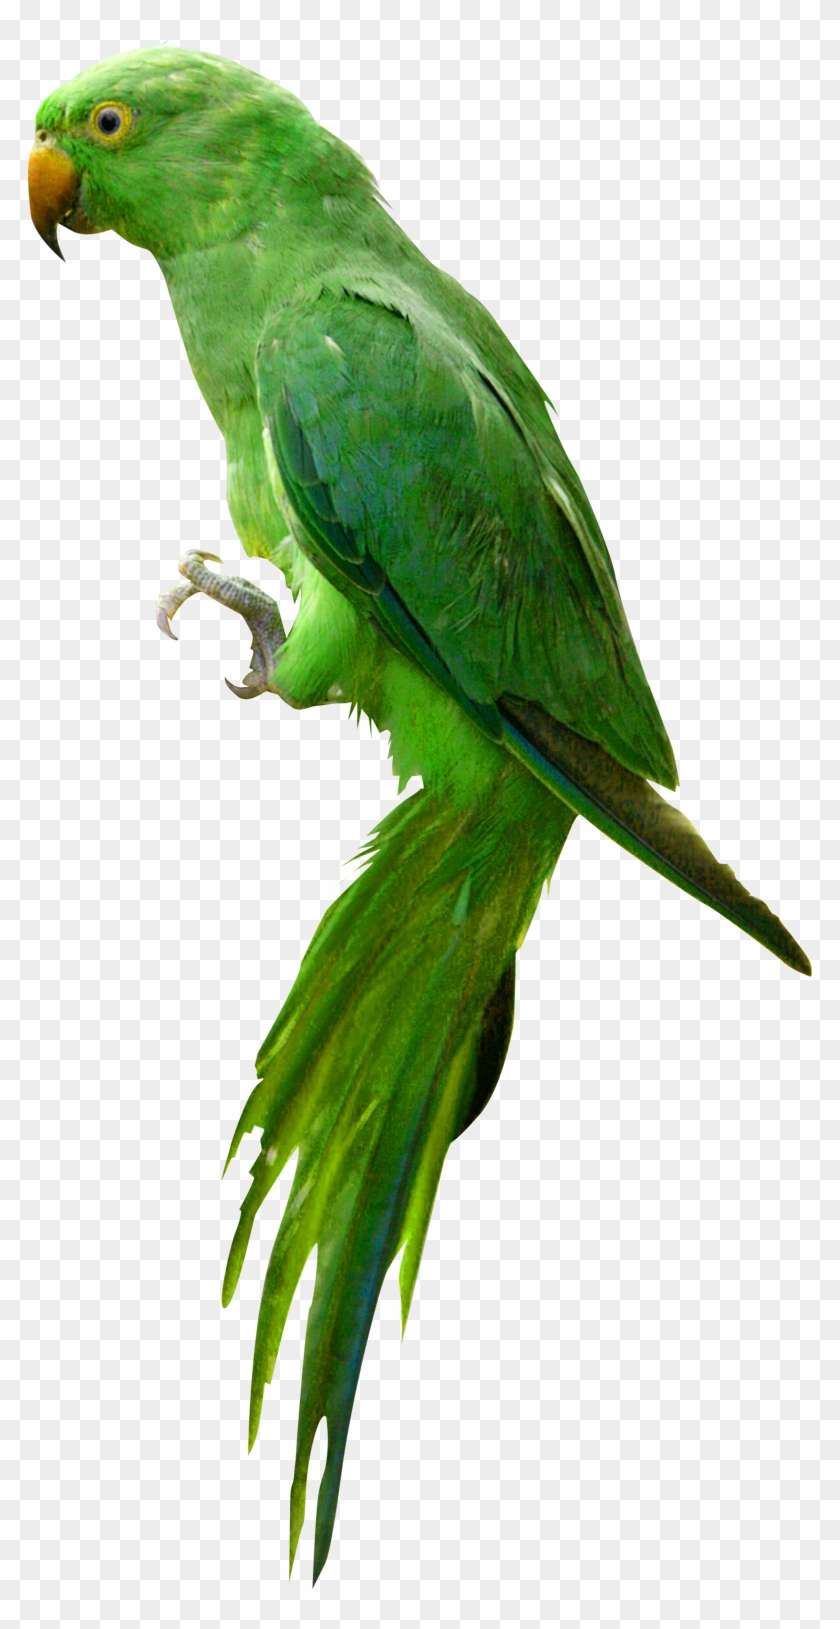 Parrot Clipart Indian - Parrot Png #305980